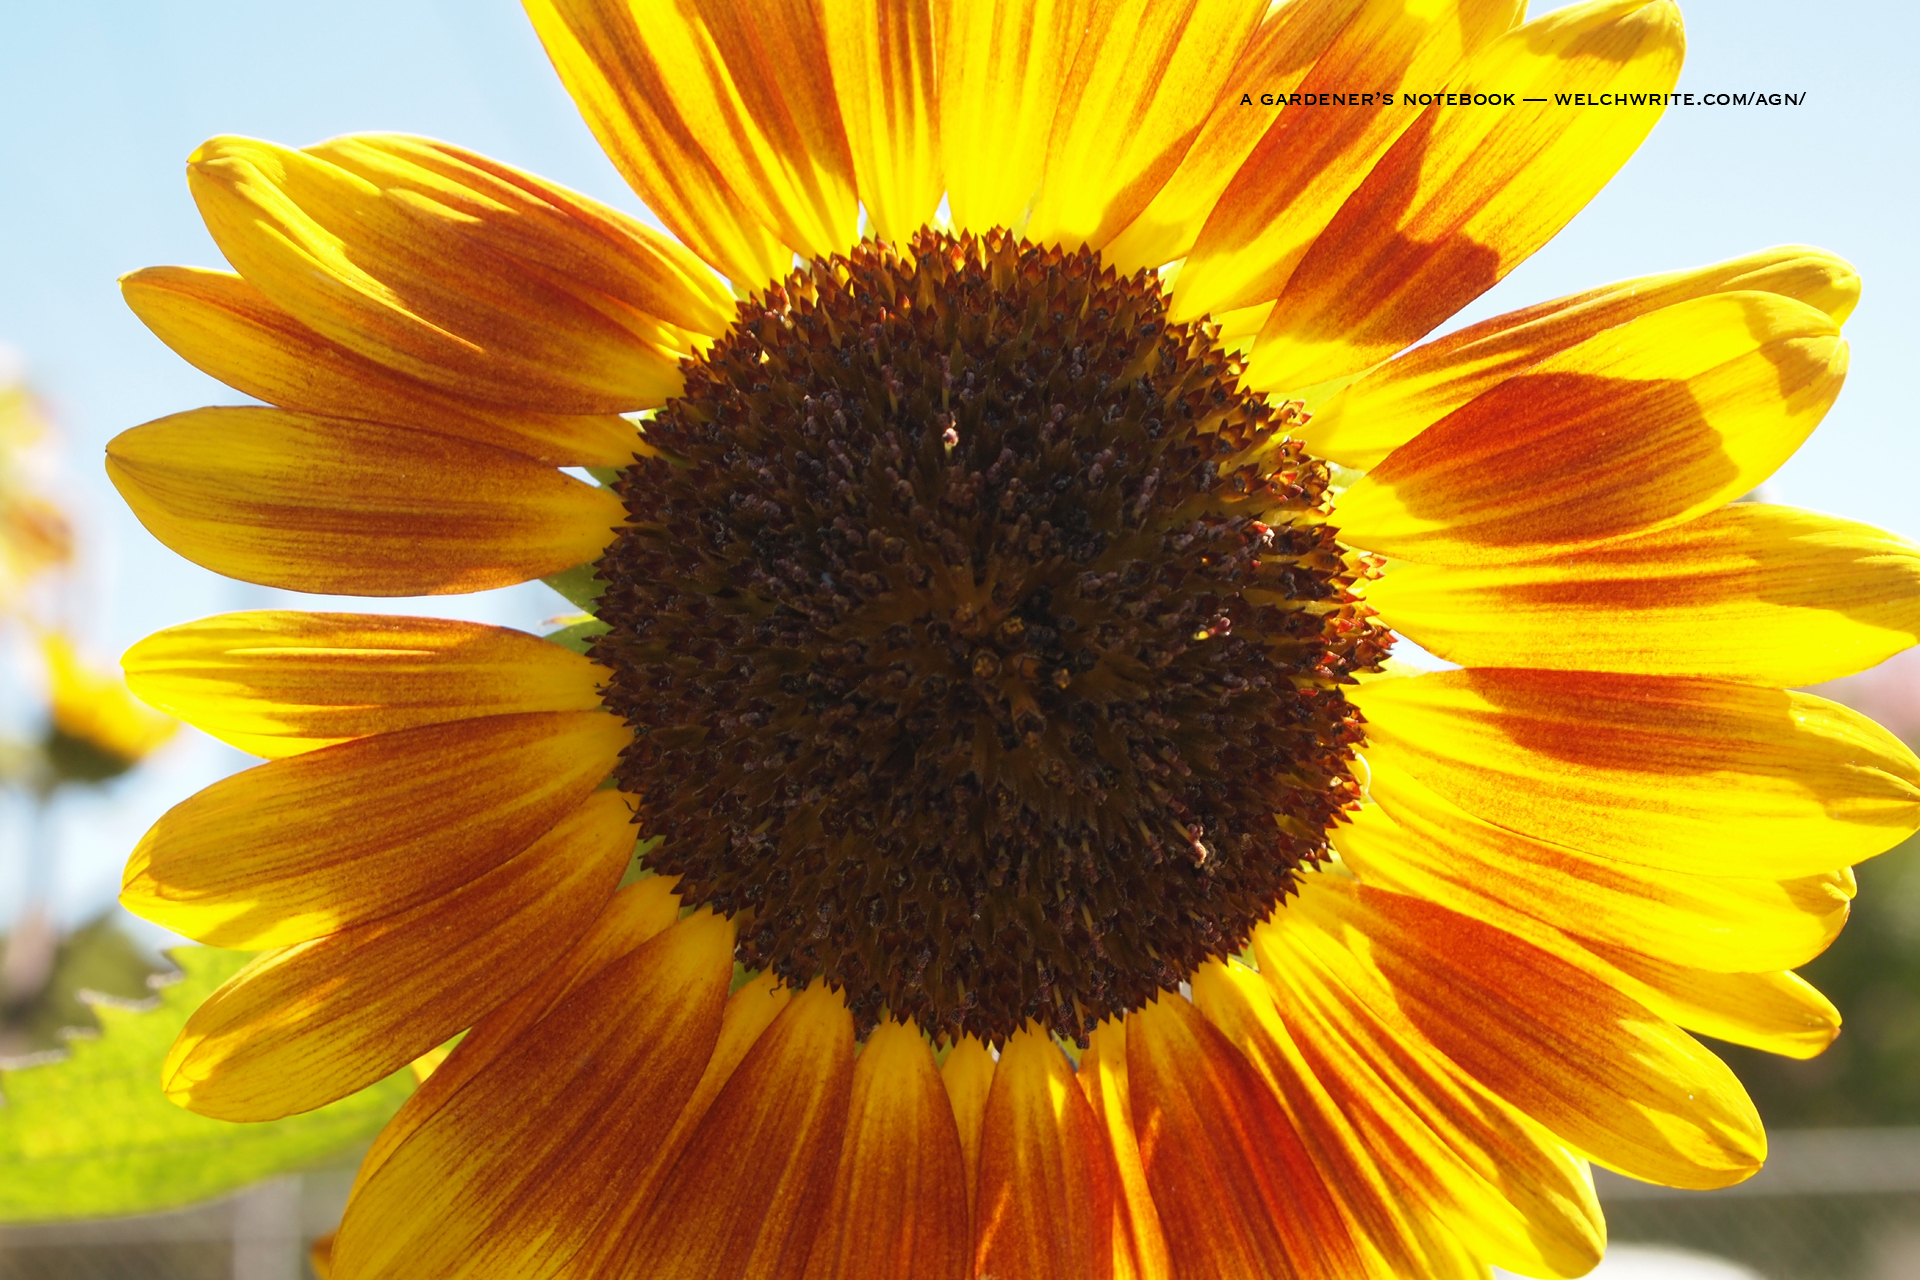 Free Garden wallpapers for July 2012 – Sunflower | A Gardener's ...